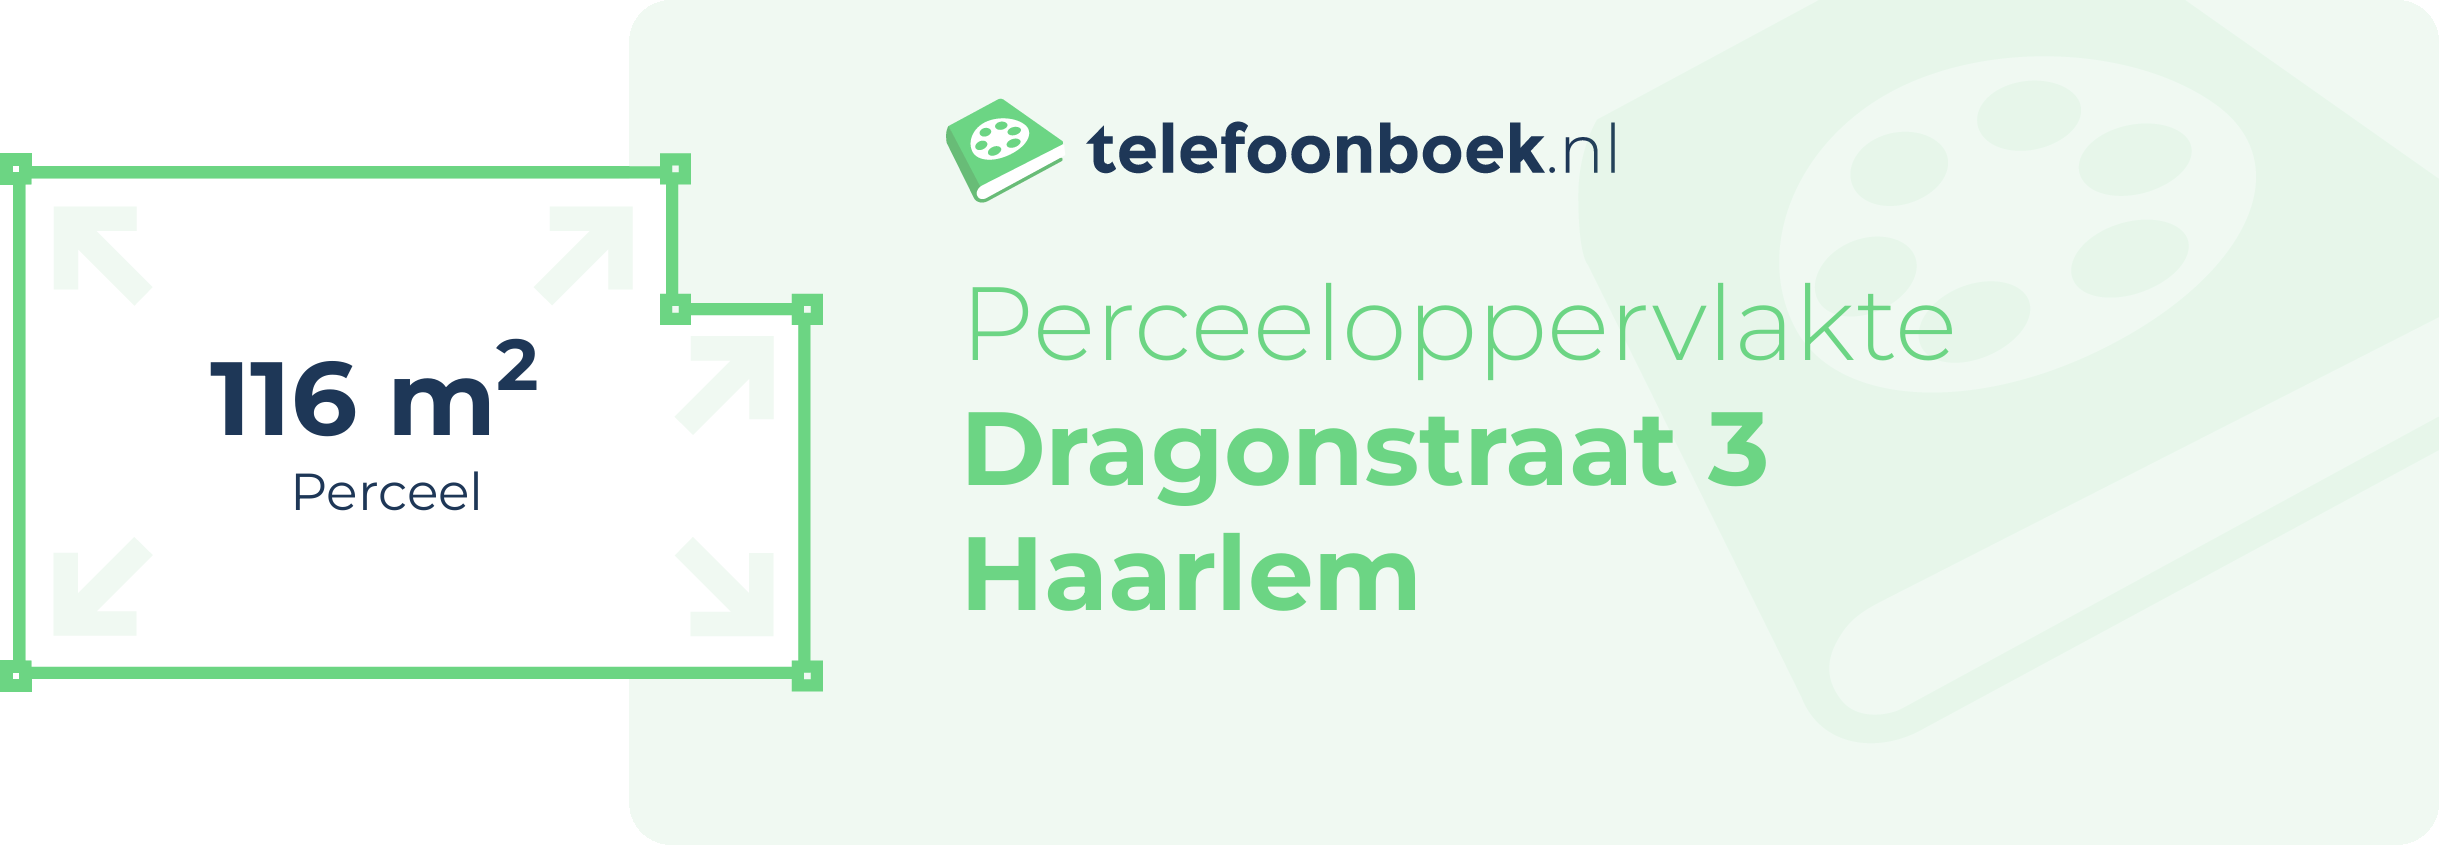 Perceeloppervlakte Dragonstraat 3 Haarlem